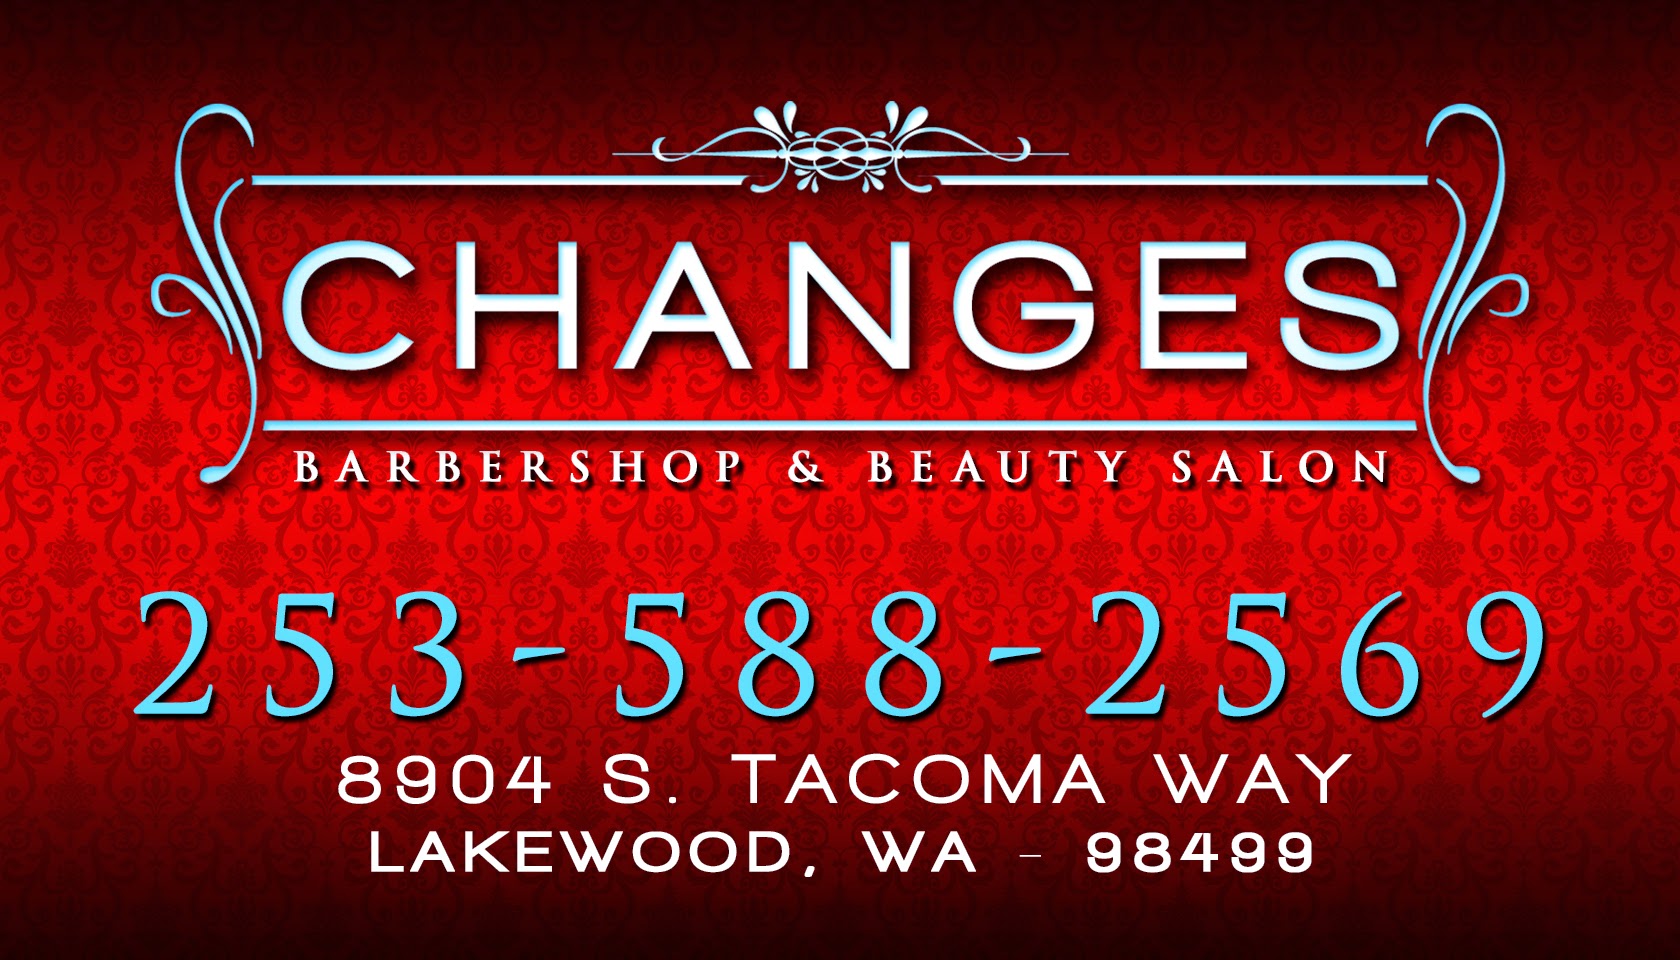 Changes Barbershop & Beauty Salon